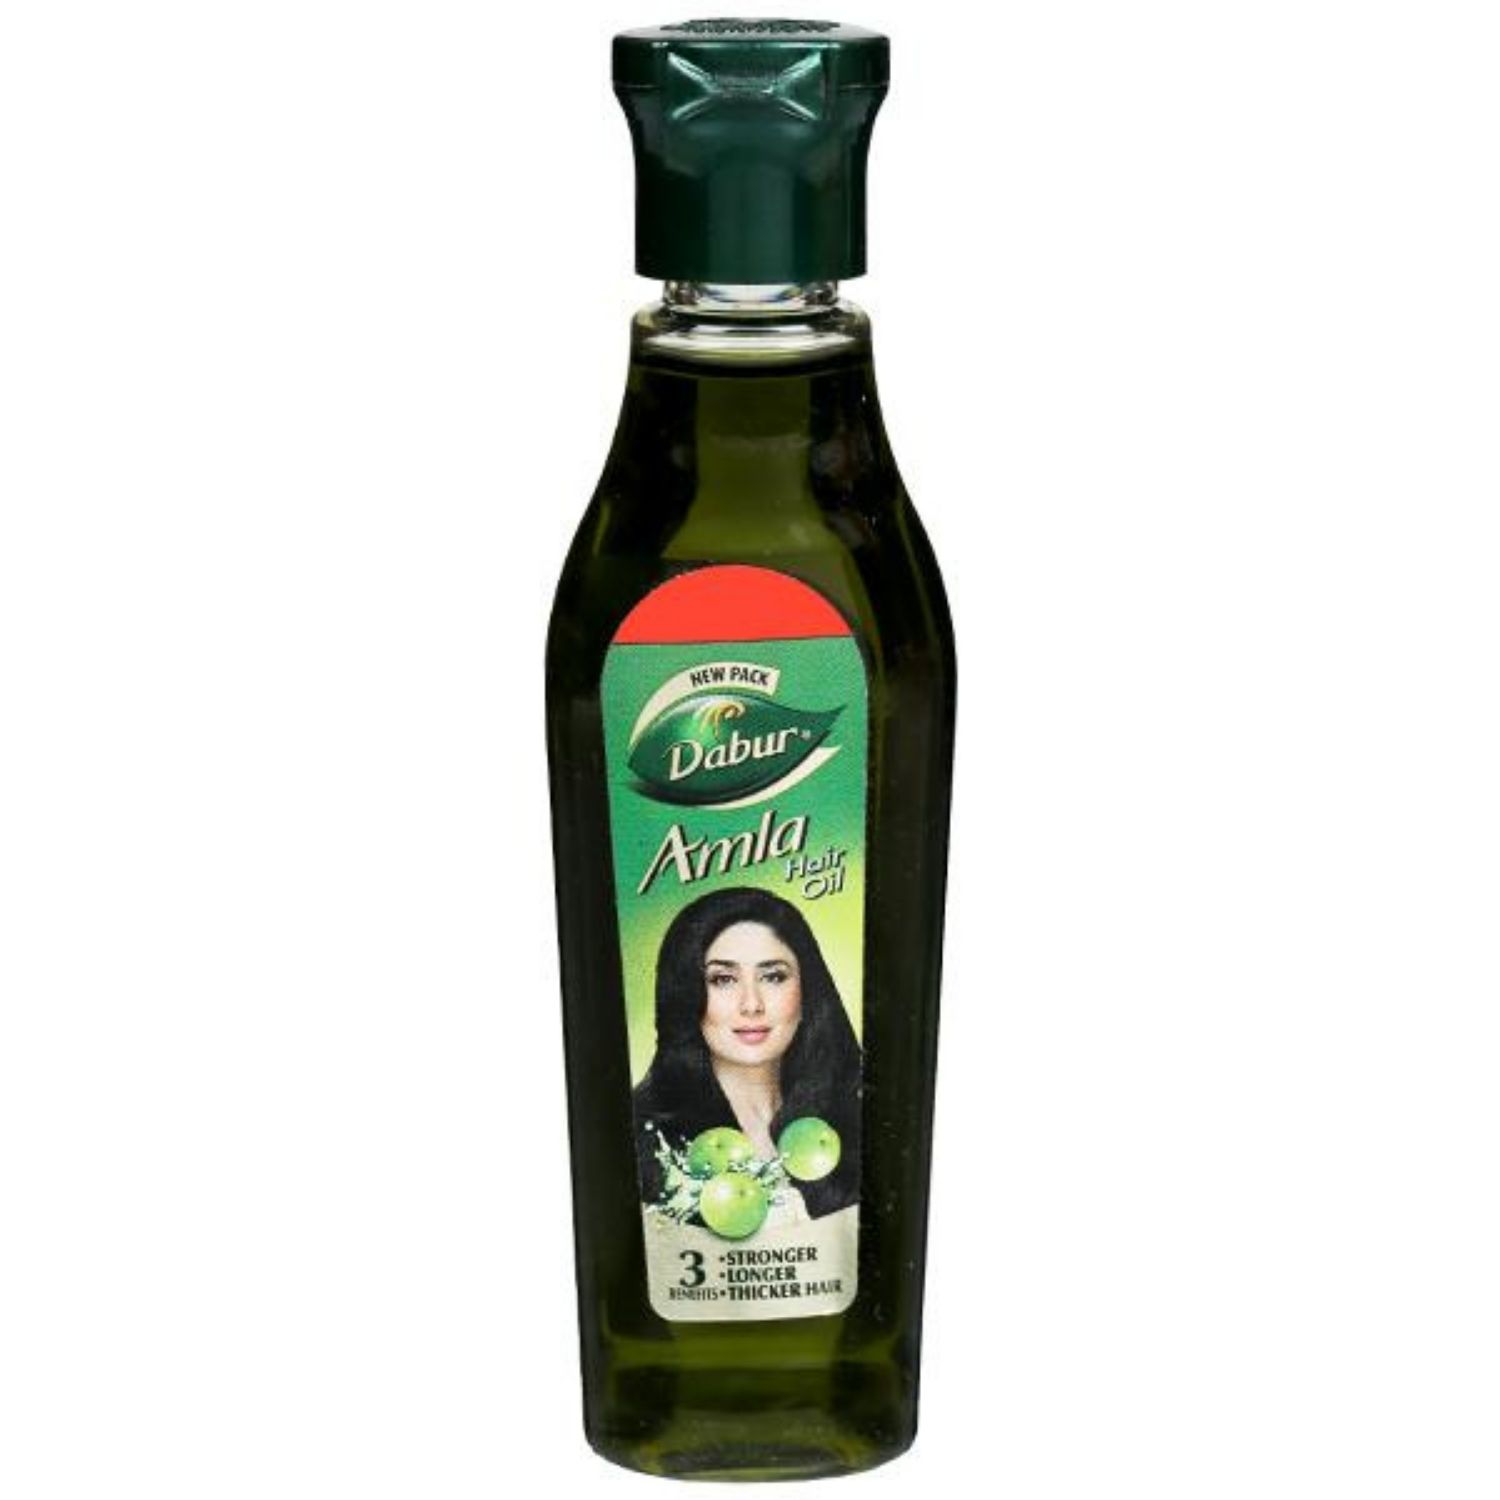 Dabur Amla Hair Oil, 30ml – 